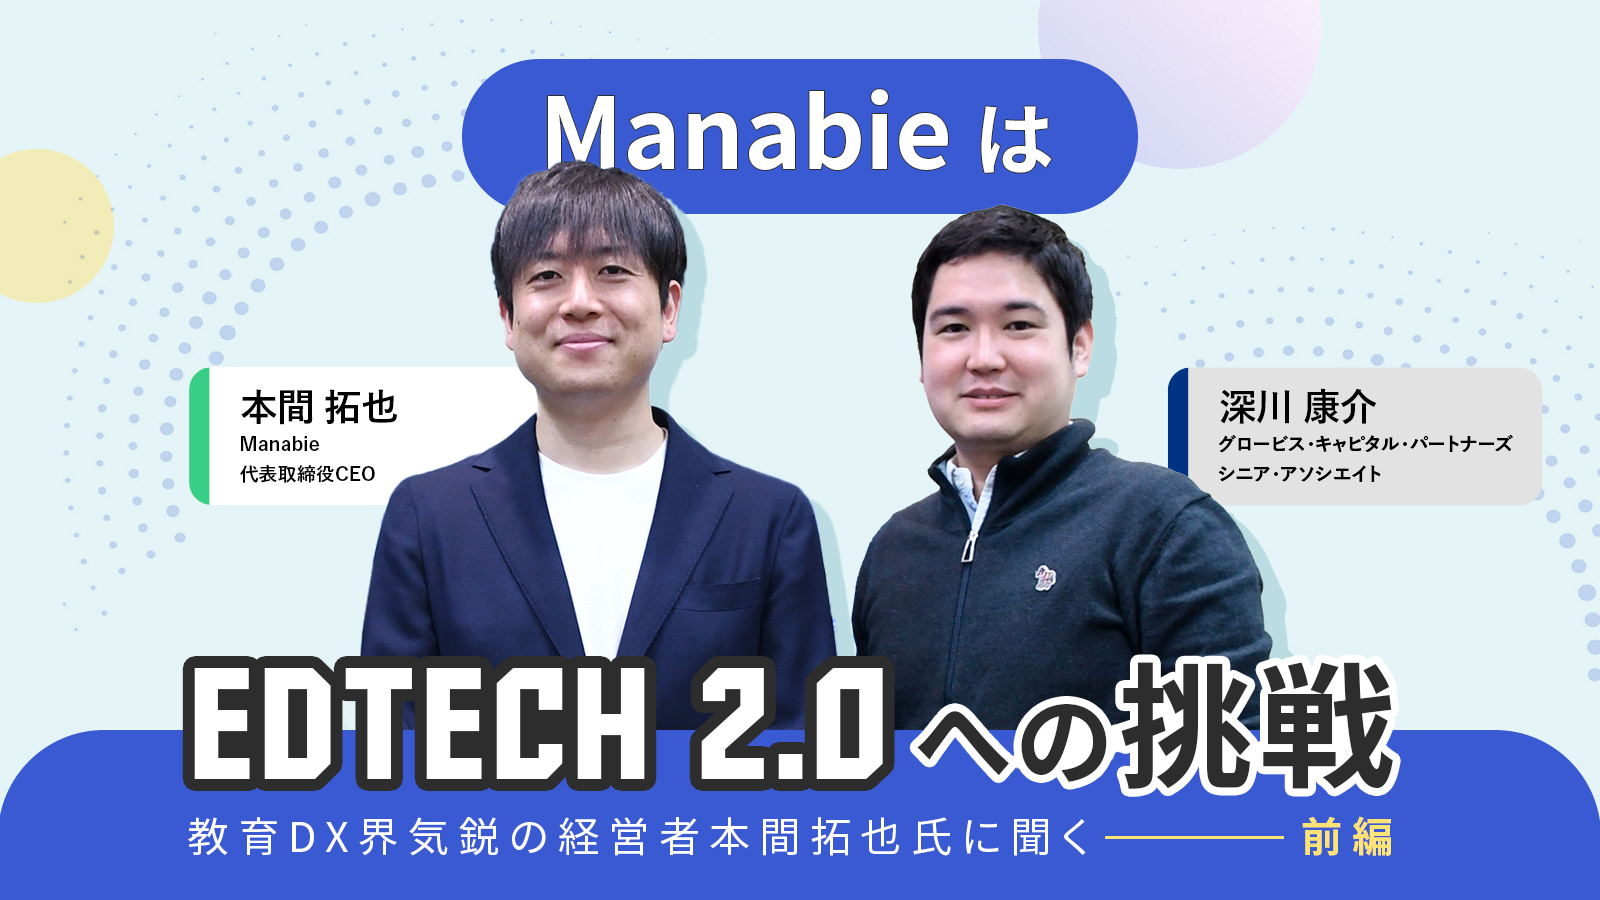 「ManabieはEdTech2.0への挑戦」――教育DX界気鋭の経営者・本間拓也氏に聞く